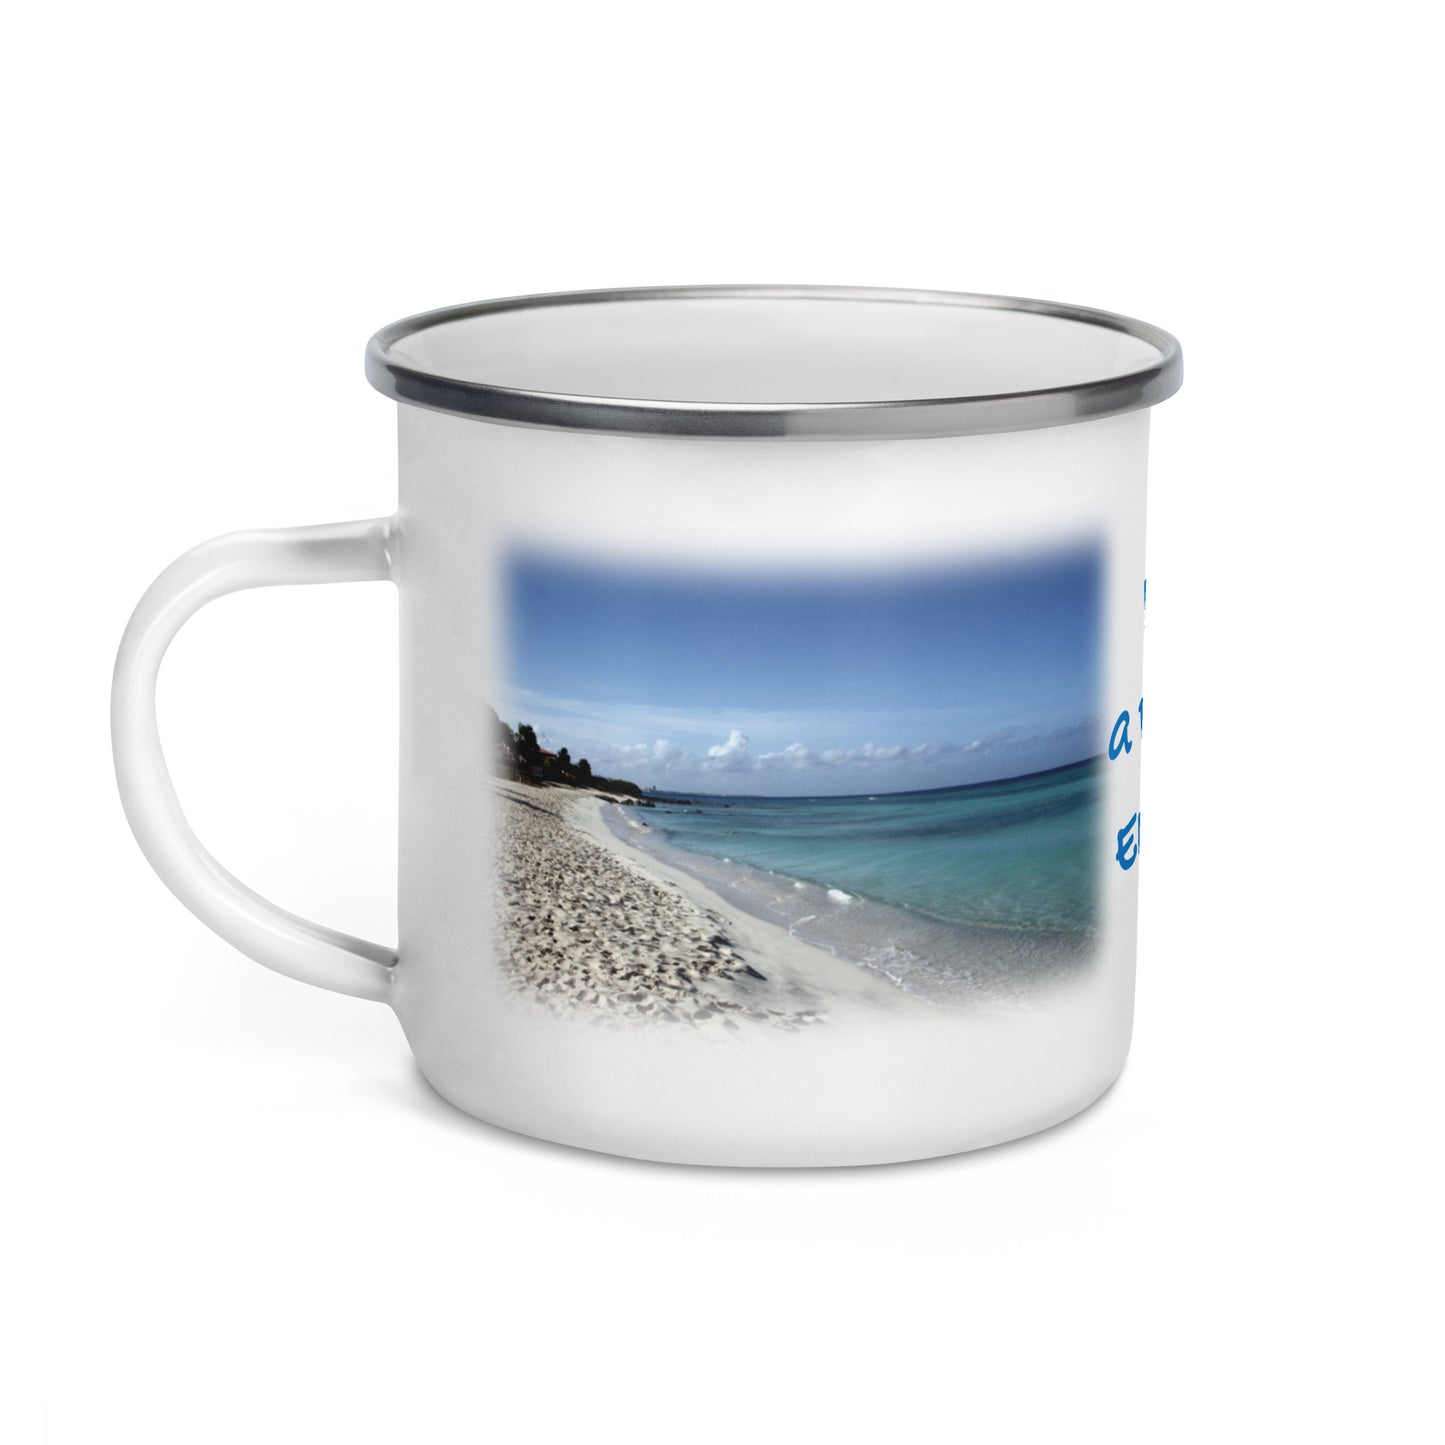 Enamel Mug - Life's a Beach!